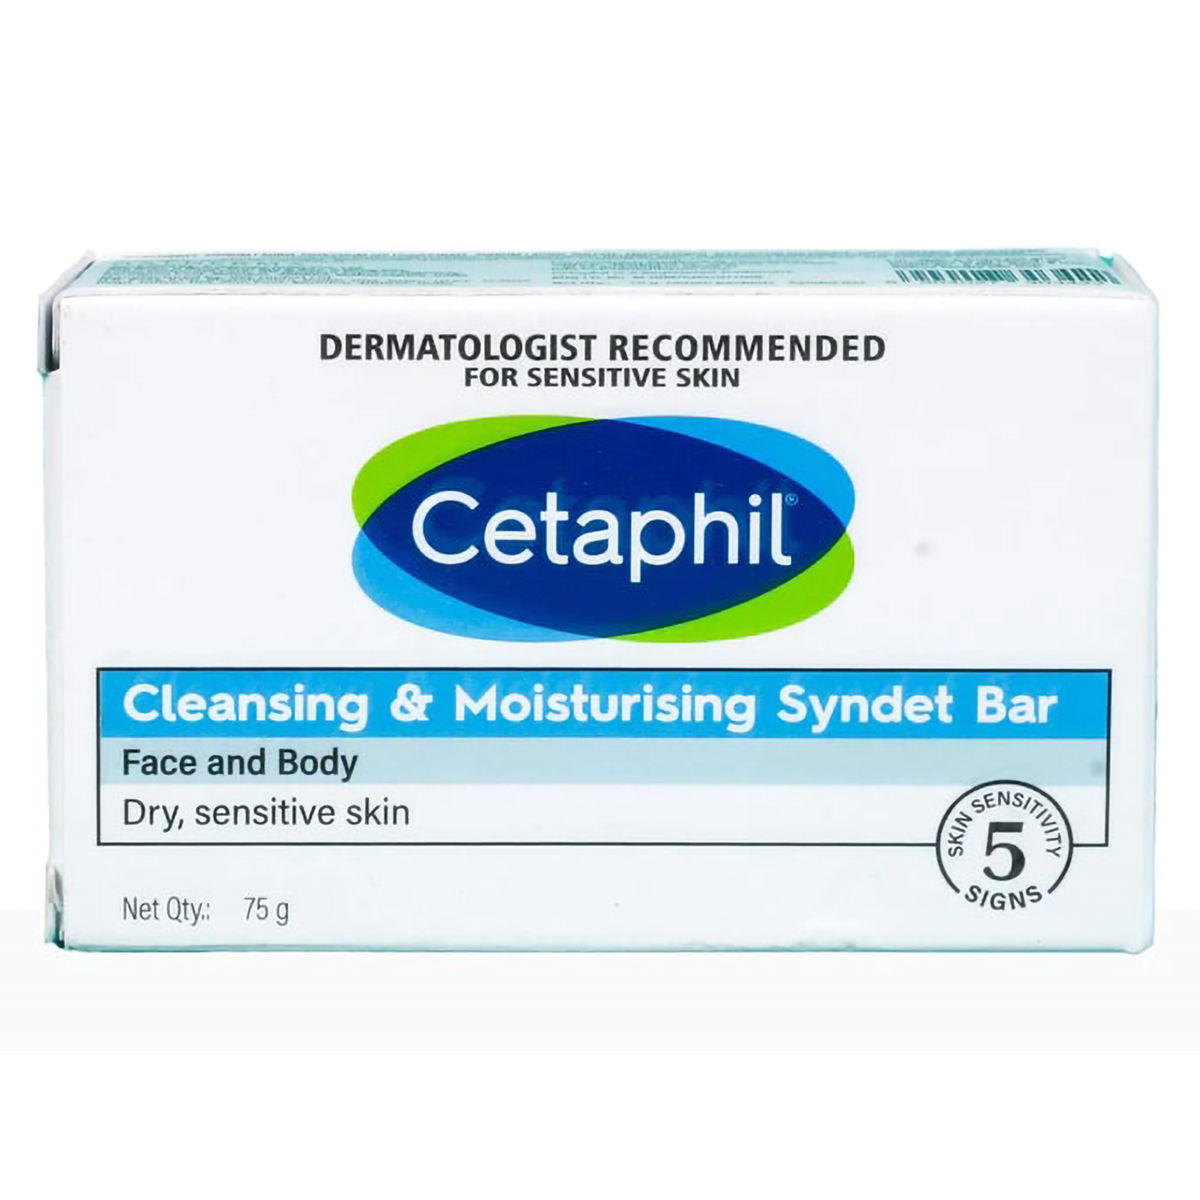 Cetaphil Cleansing & Moisturising Syndet Bar, 75 gm, Pack of 1 